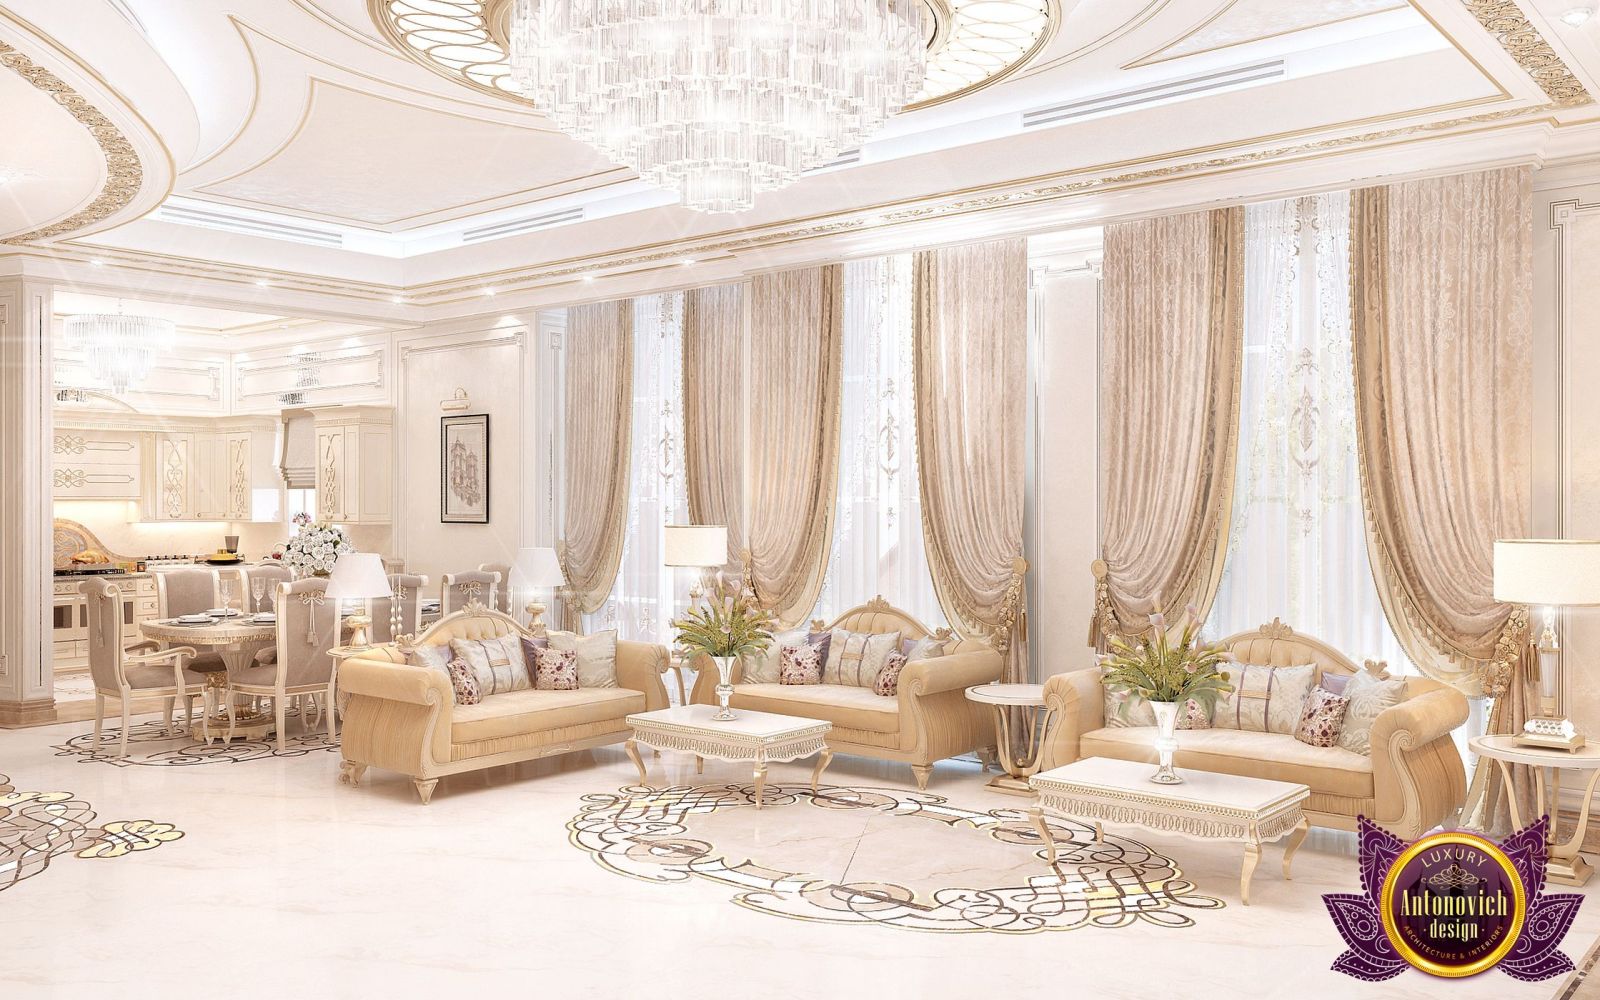 Discover Abu Dhabi's Top Interior Design Secrets & Trends!